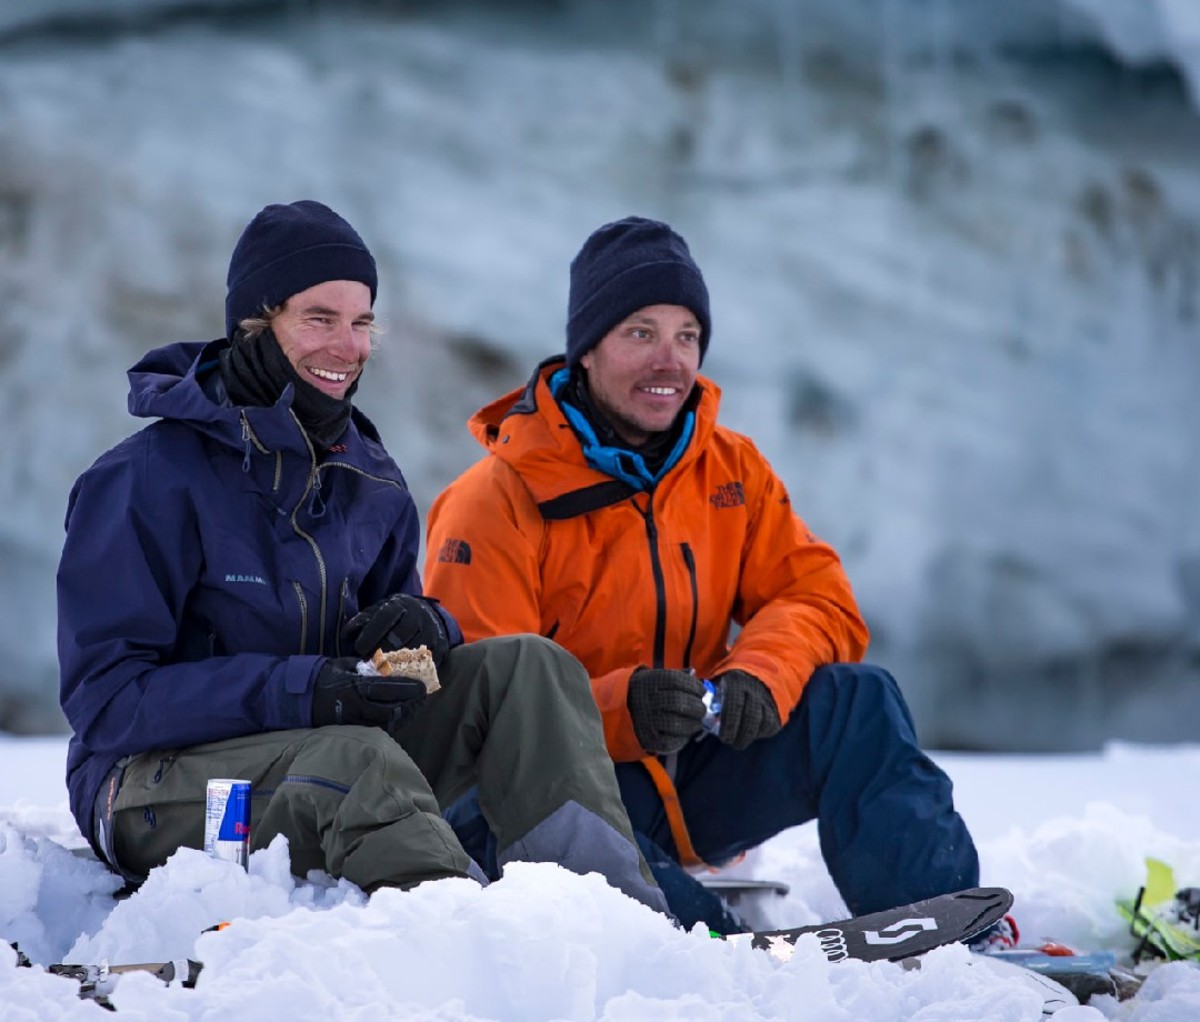 Jeremie Heitz and Sam Anthamatten sitting on the mountain in ski wear